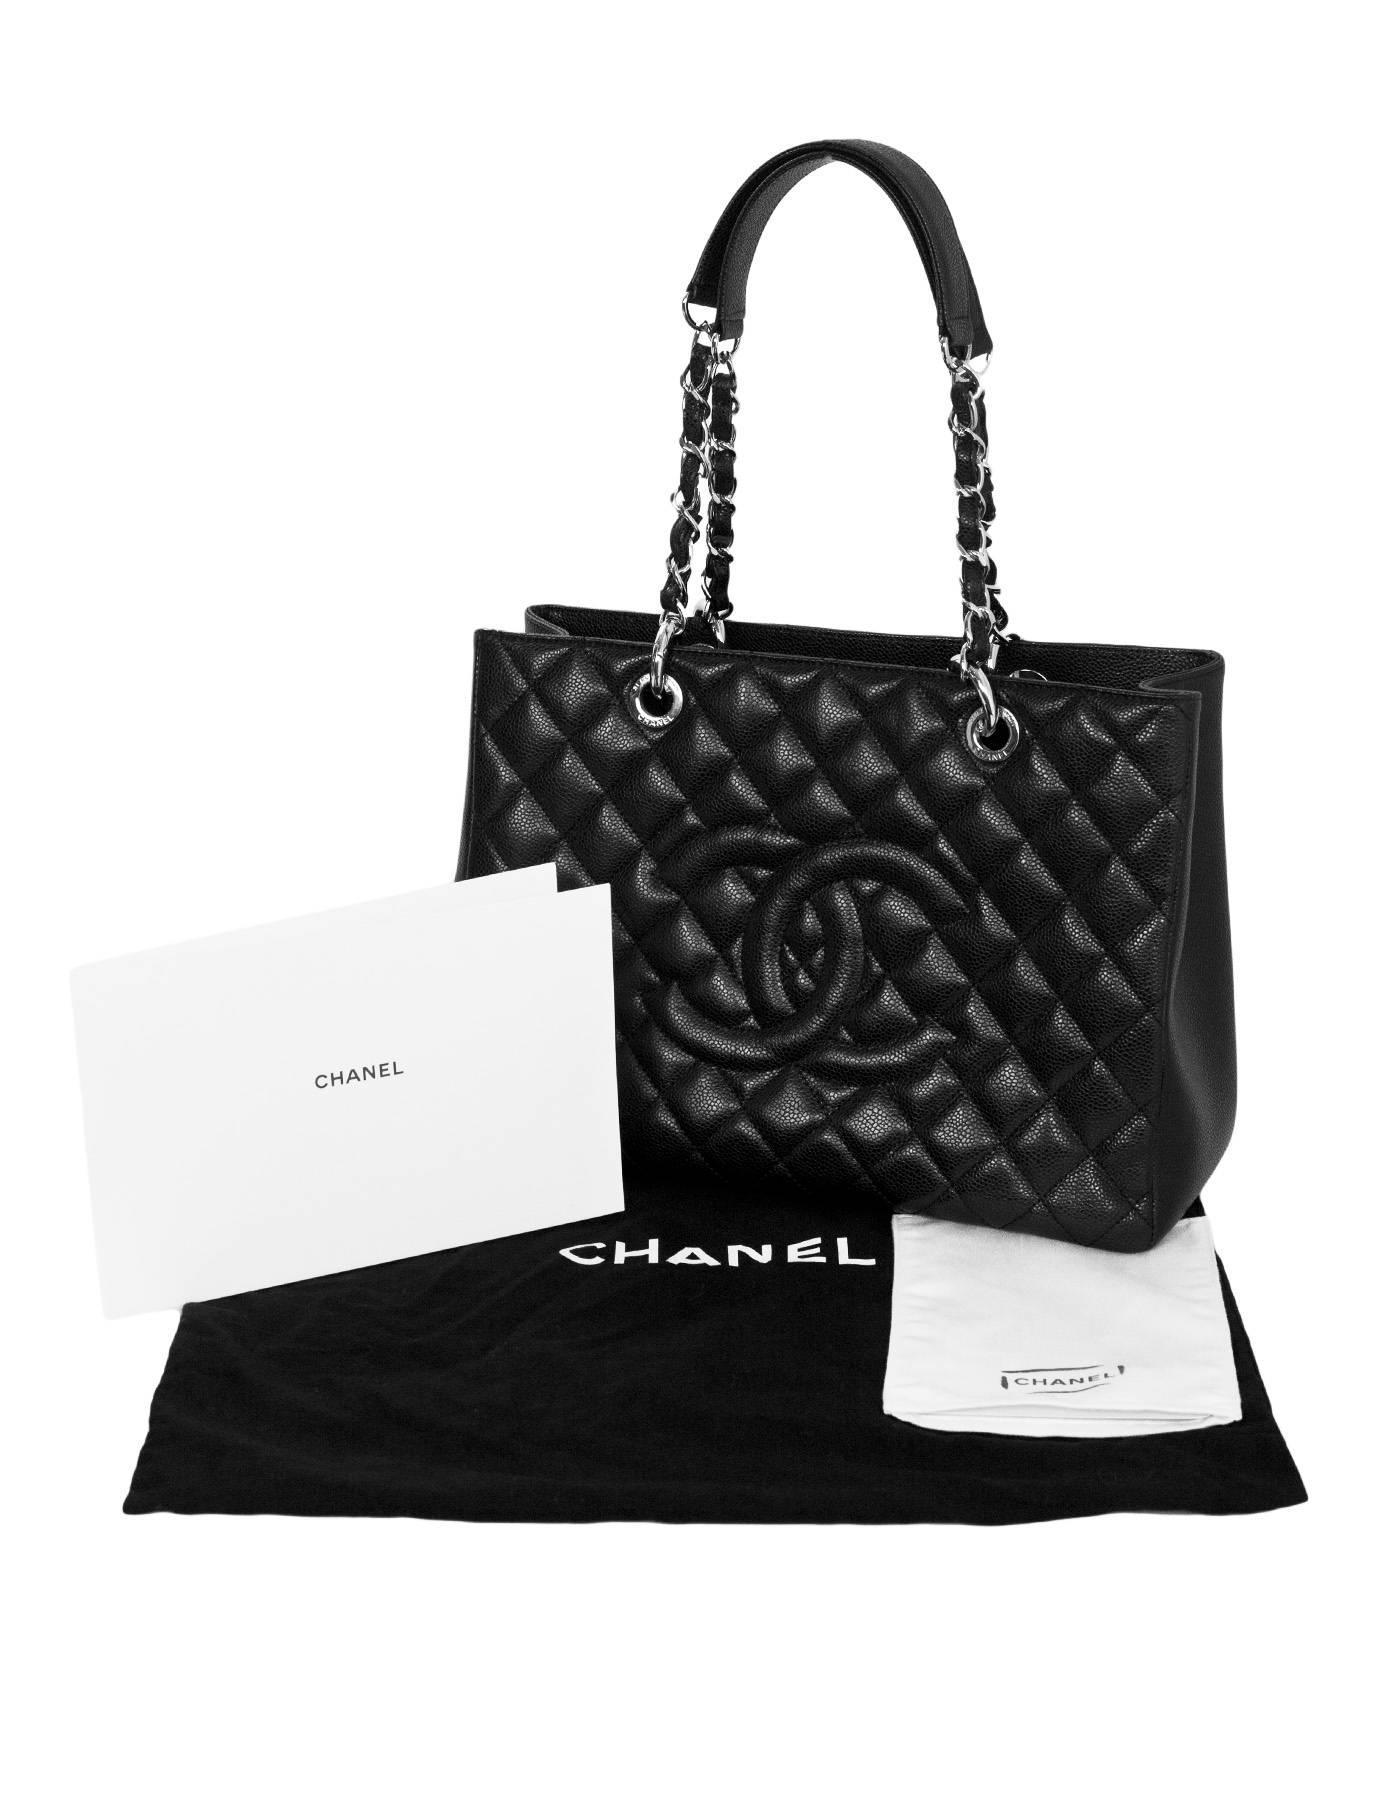 Chanel Black Caviar Leather GST Grand Shopper Tote Bag with SHW 5